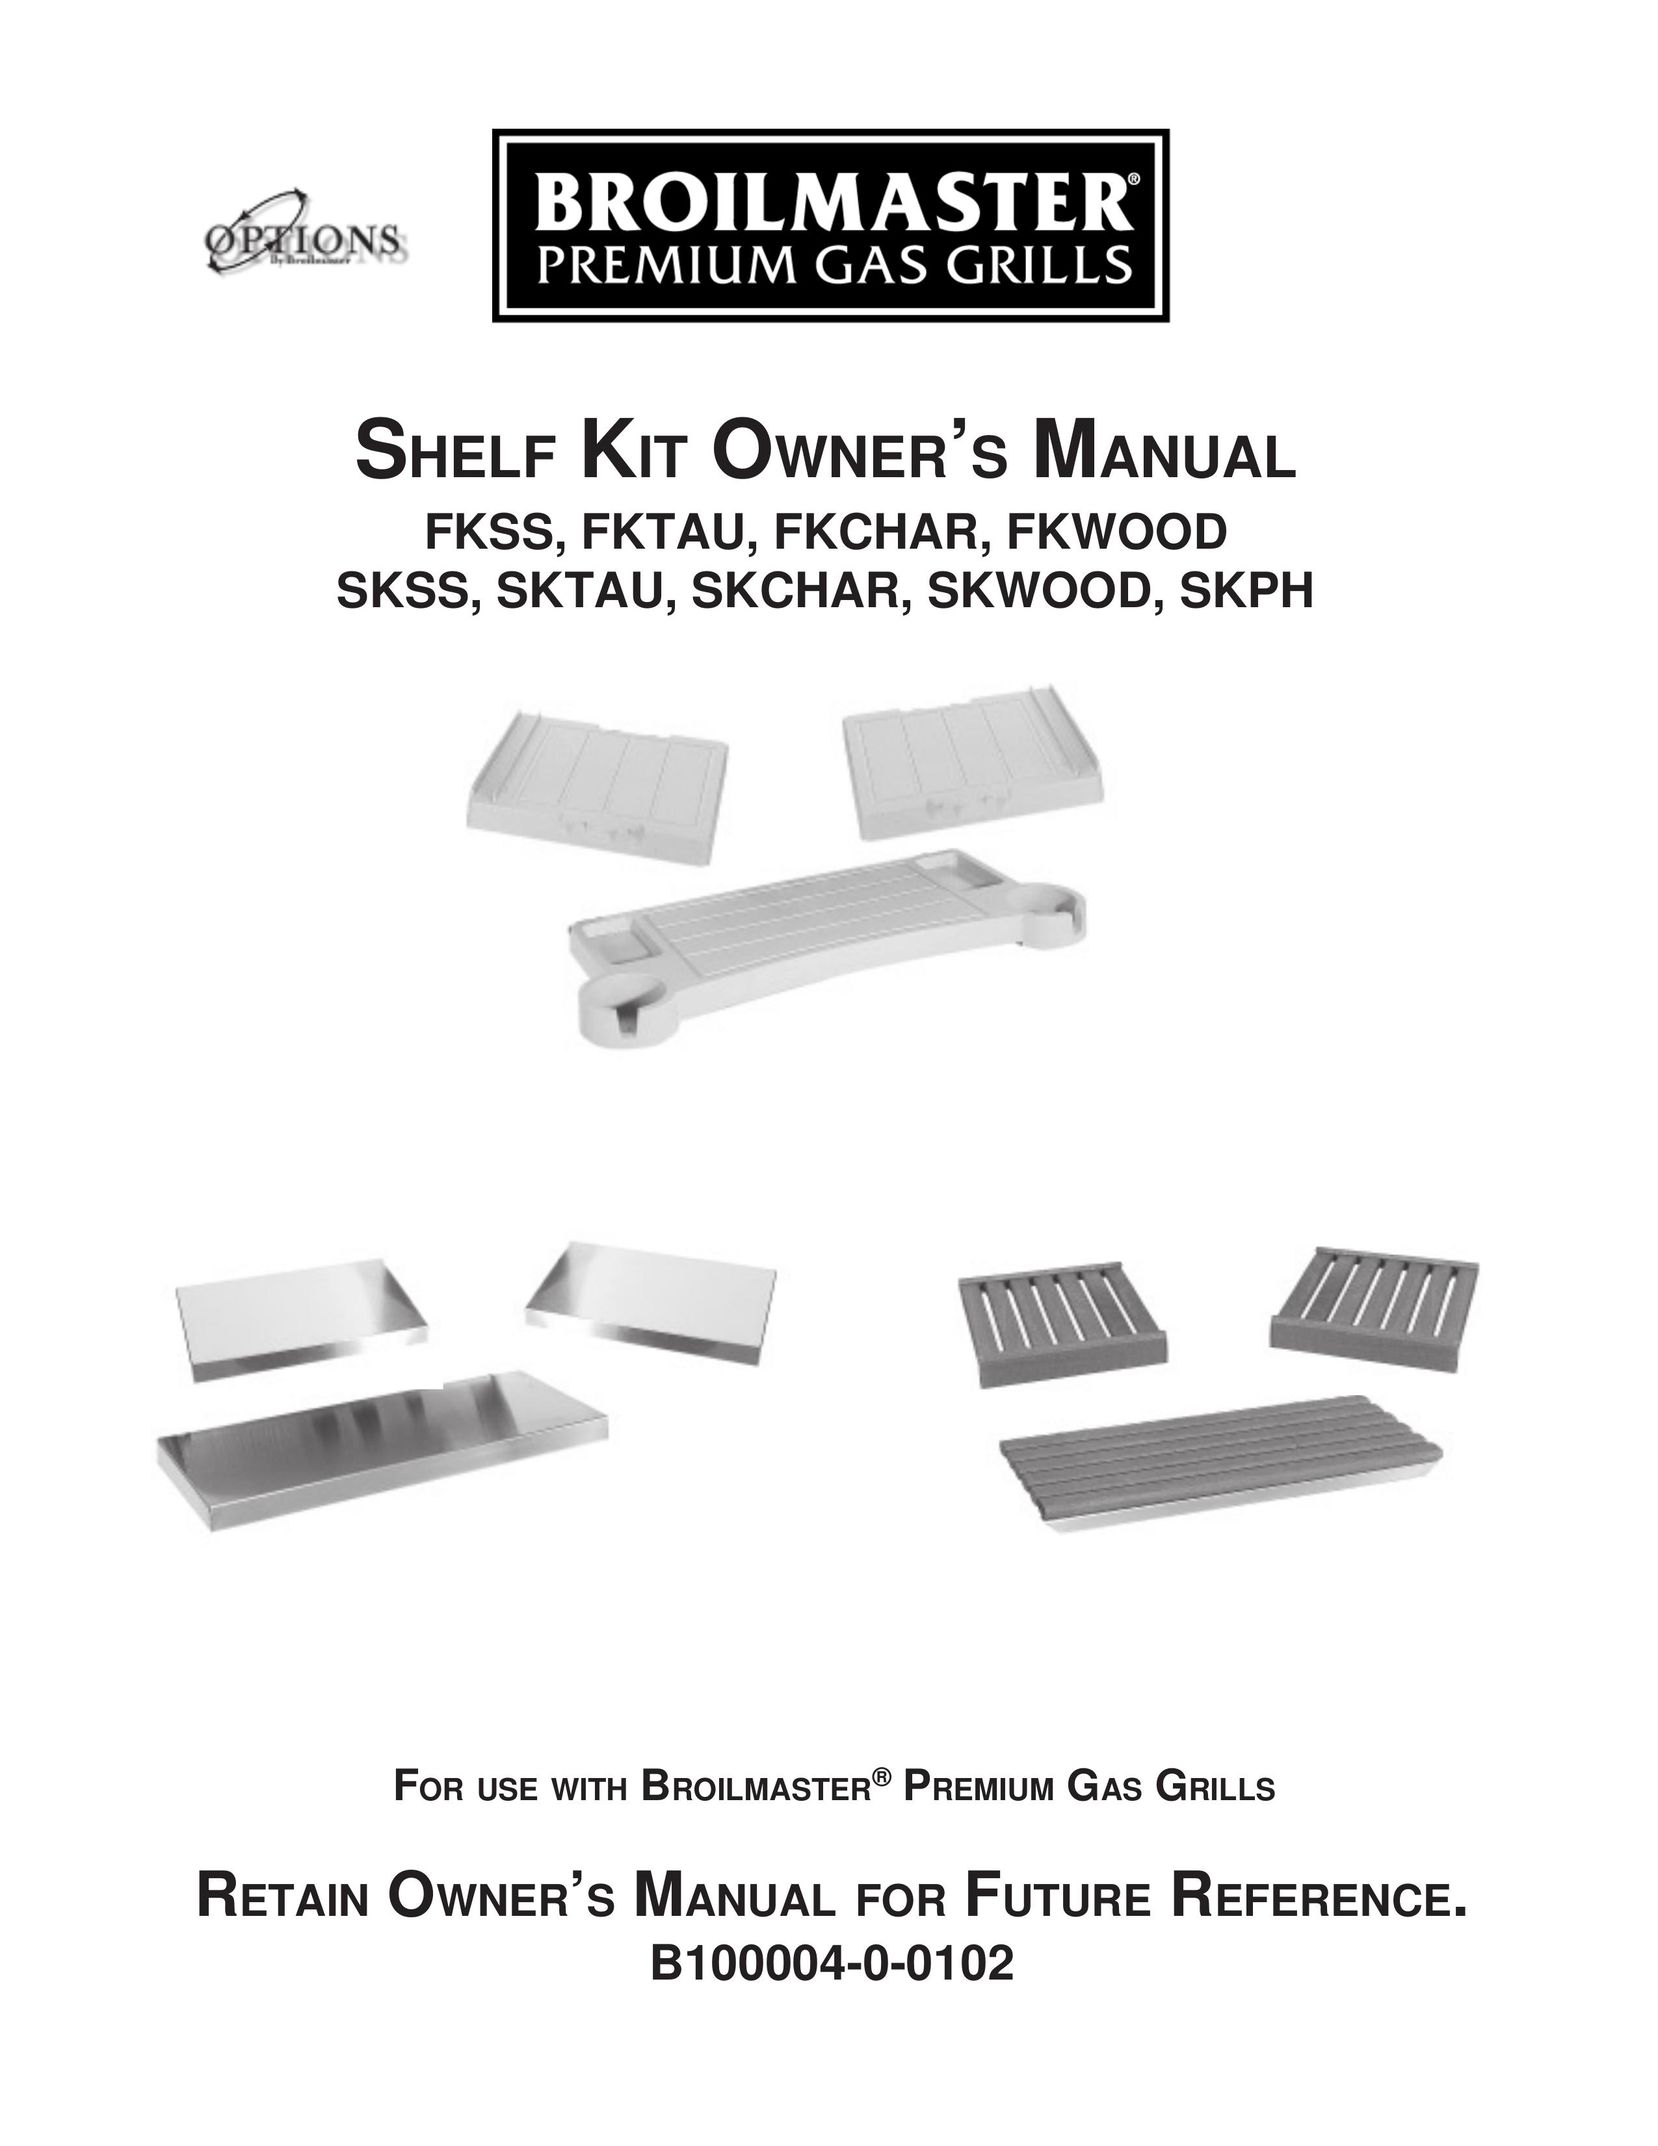 Broilmaster SKSS Kitchen Grill User Manual